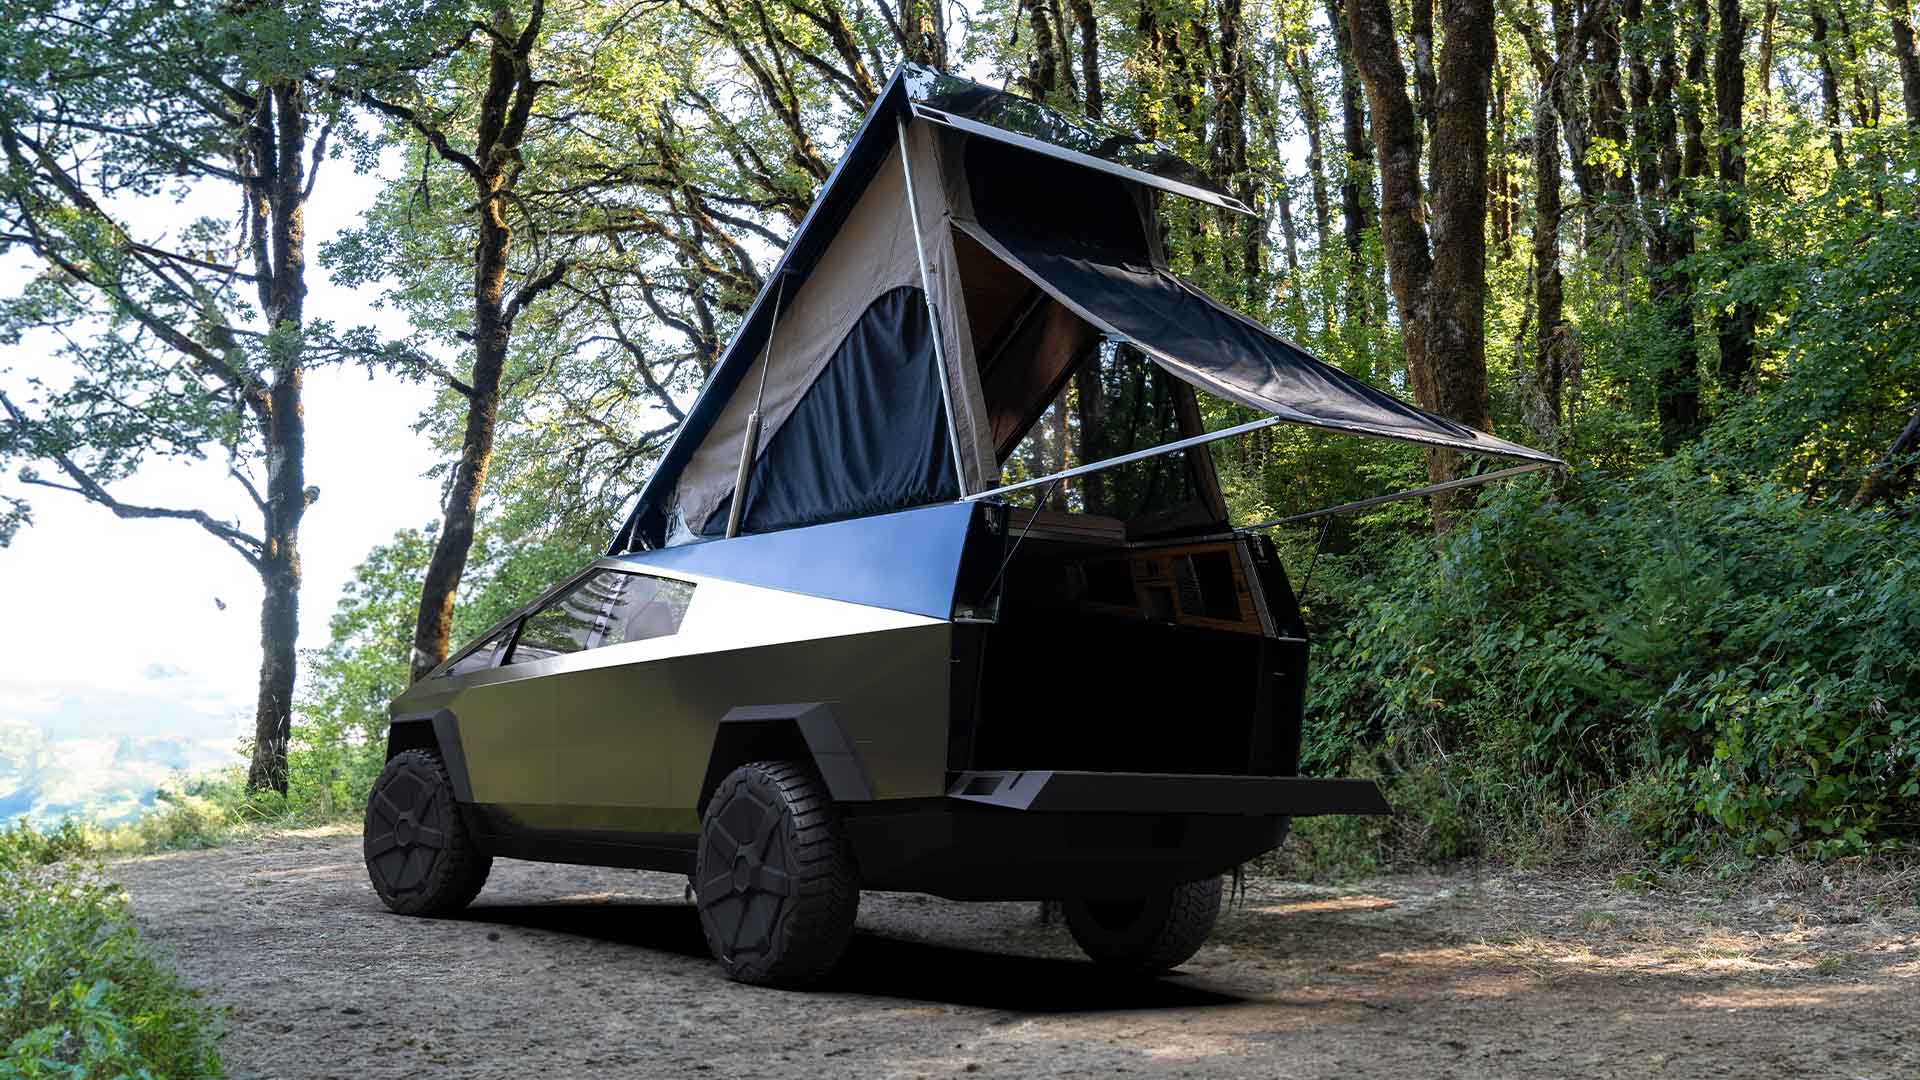 Prototype Camper in Woods on Cybertruck